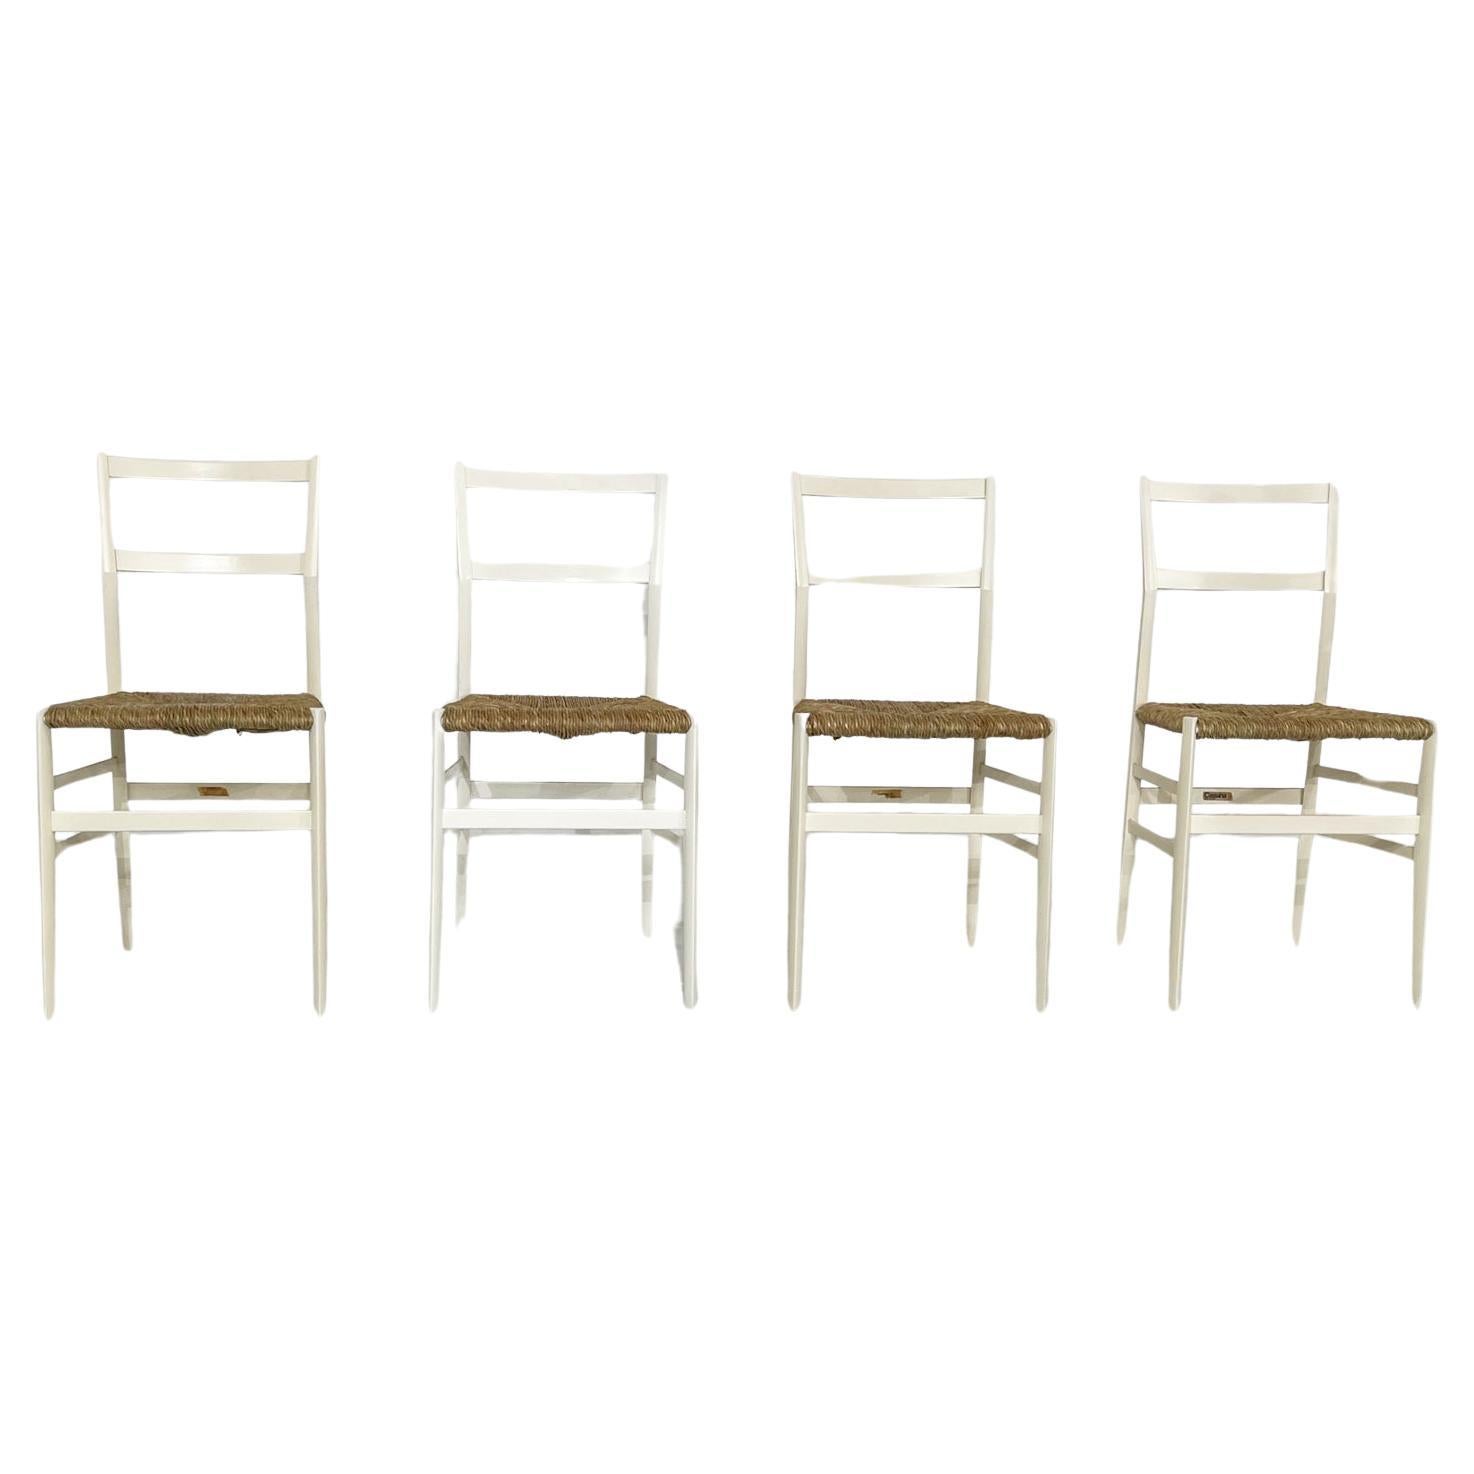 Ensemble impressionnant de 4 chaises SuperLeggera de Gio Ponti pour Cassina - 1950